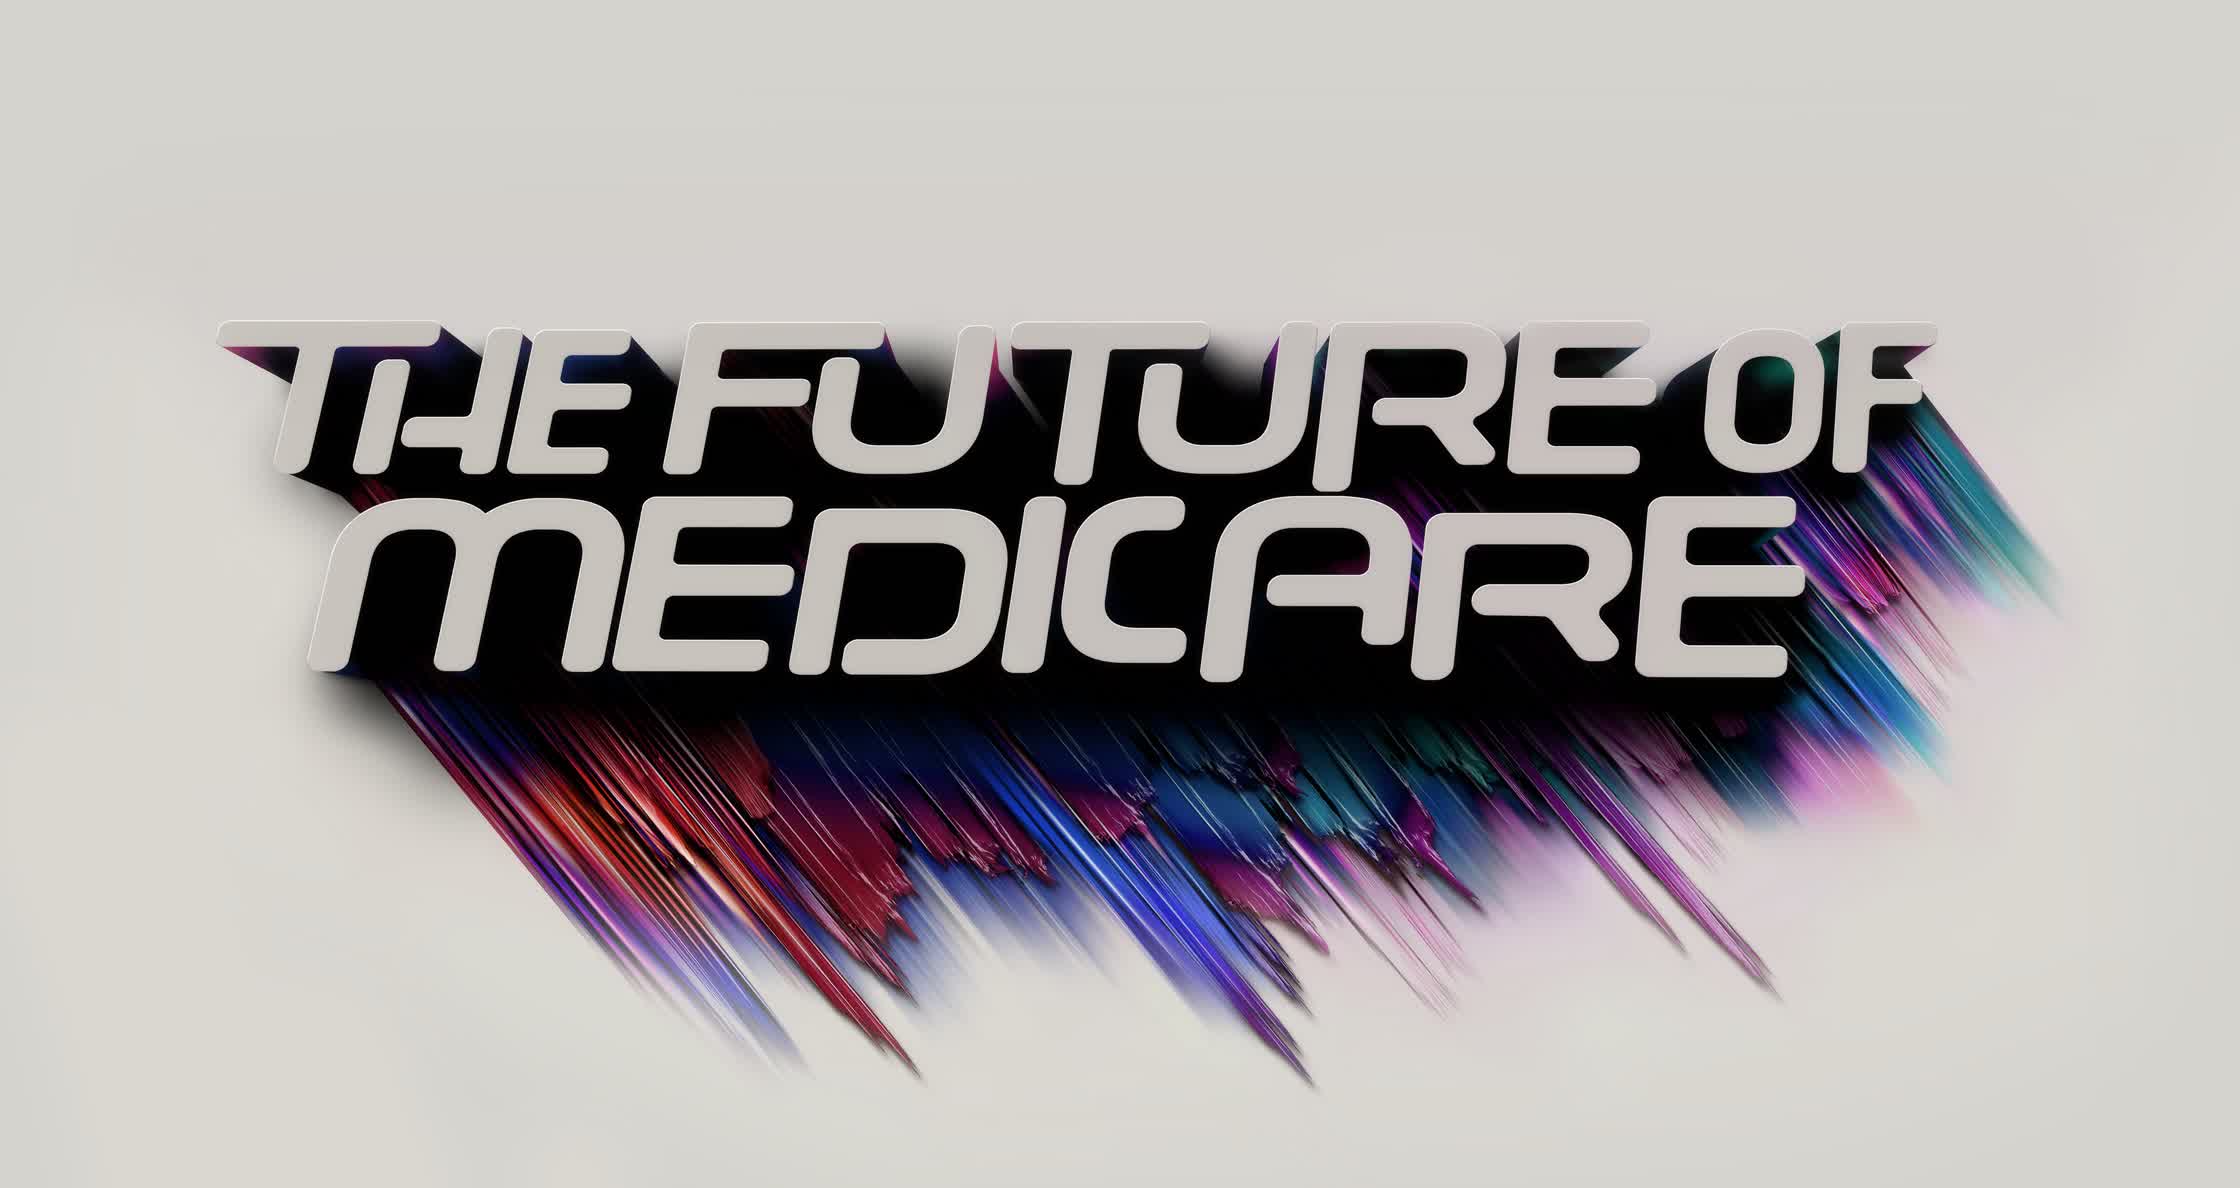 The Future of Medicare.jpg